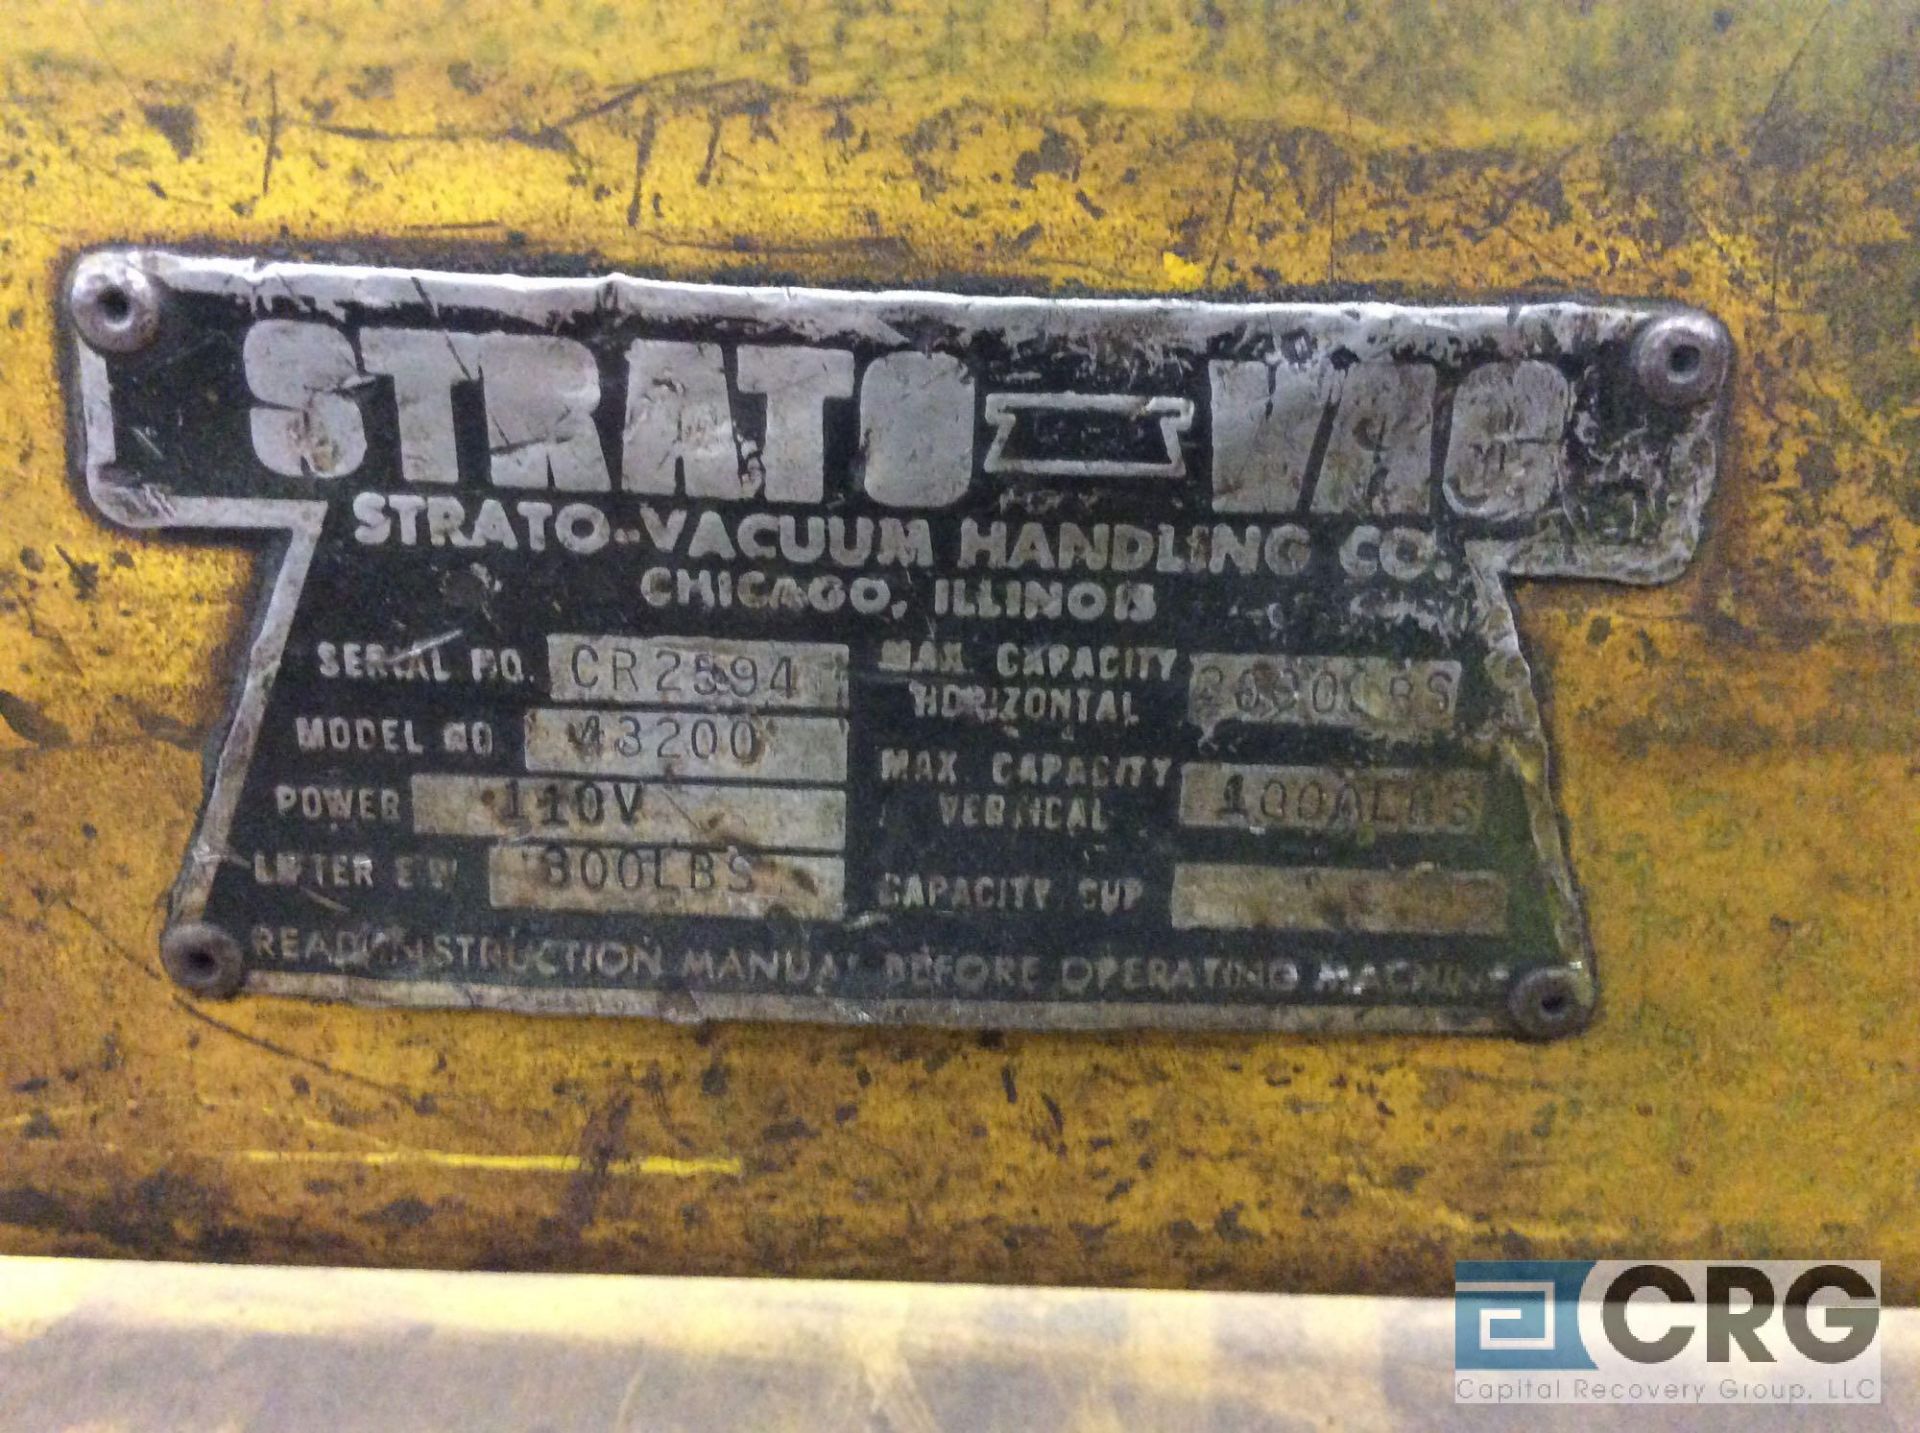 Strato Vac 3200 flat steel stock vacuum handler, 800 lb capacity - Image 2 of 2